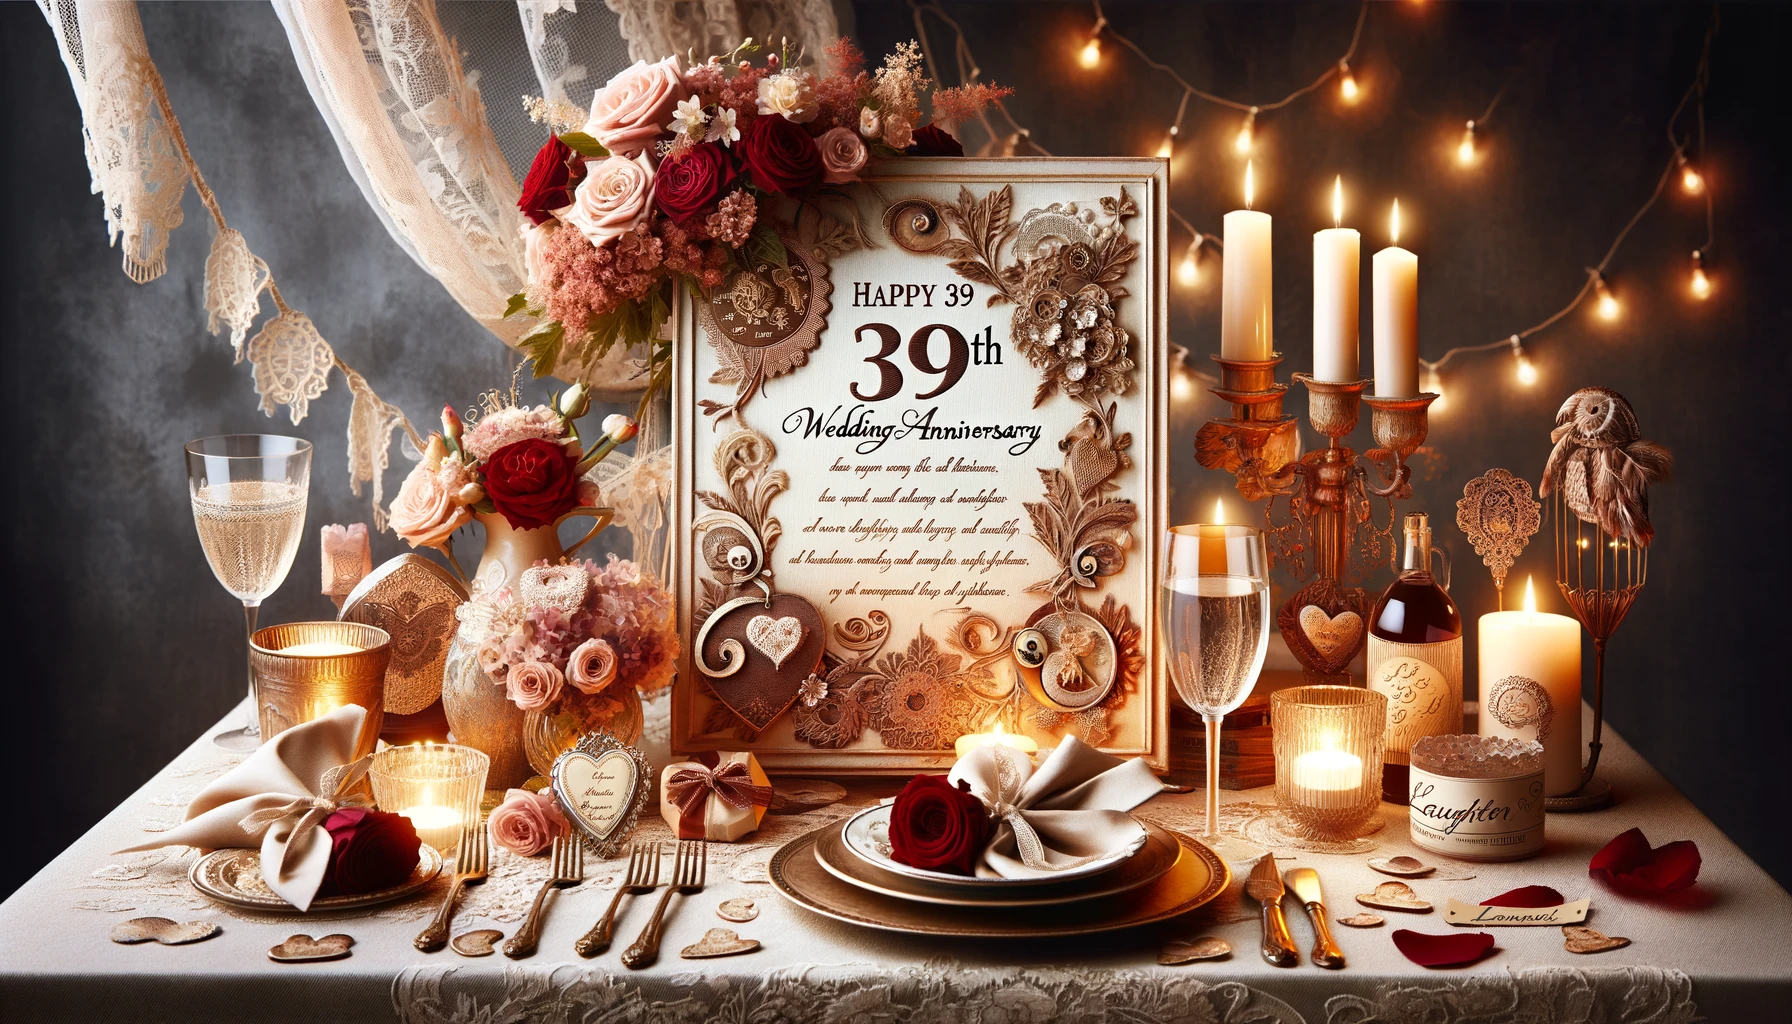 Celebration Tips for 39th Wedding Anniversary